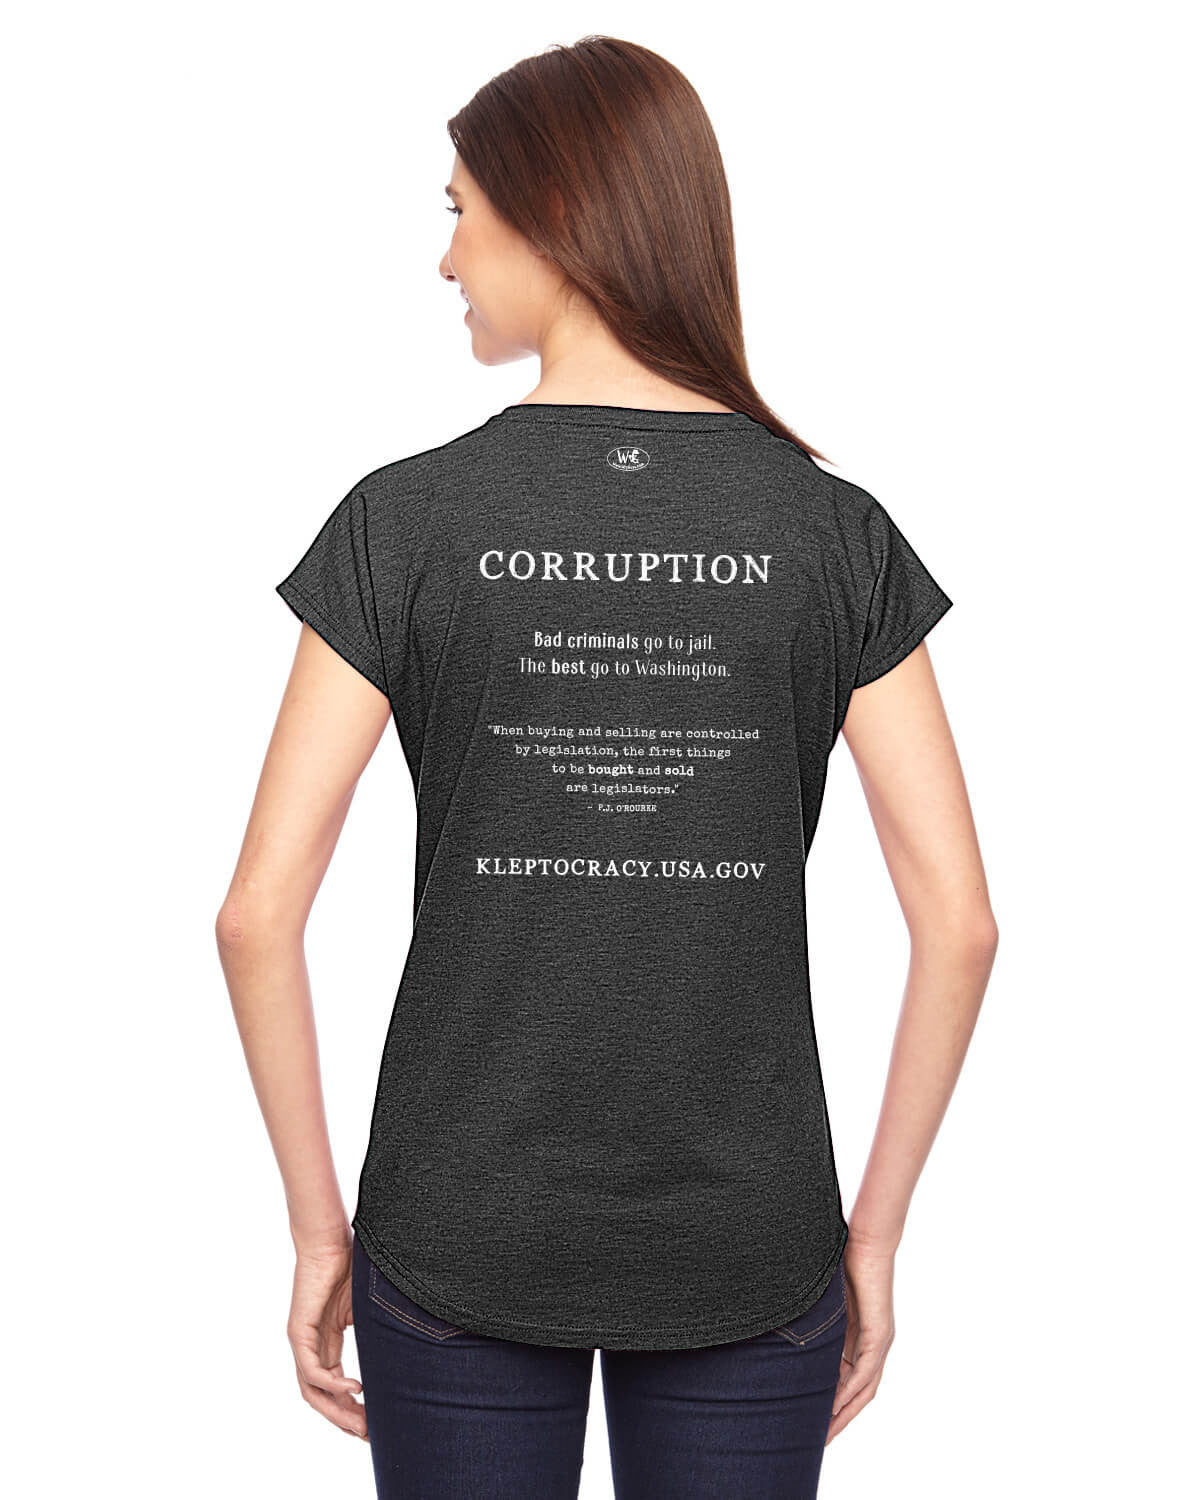 Corruption sells humorous graphic t shirts women